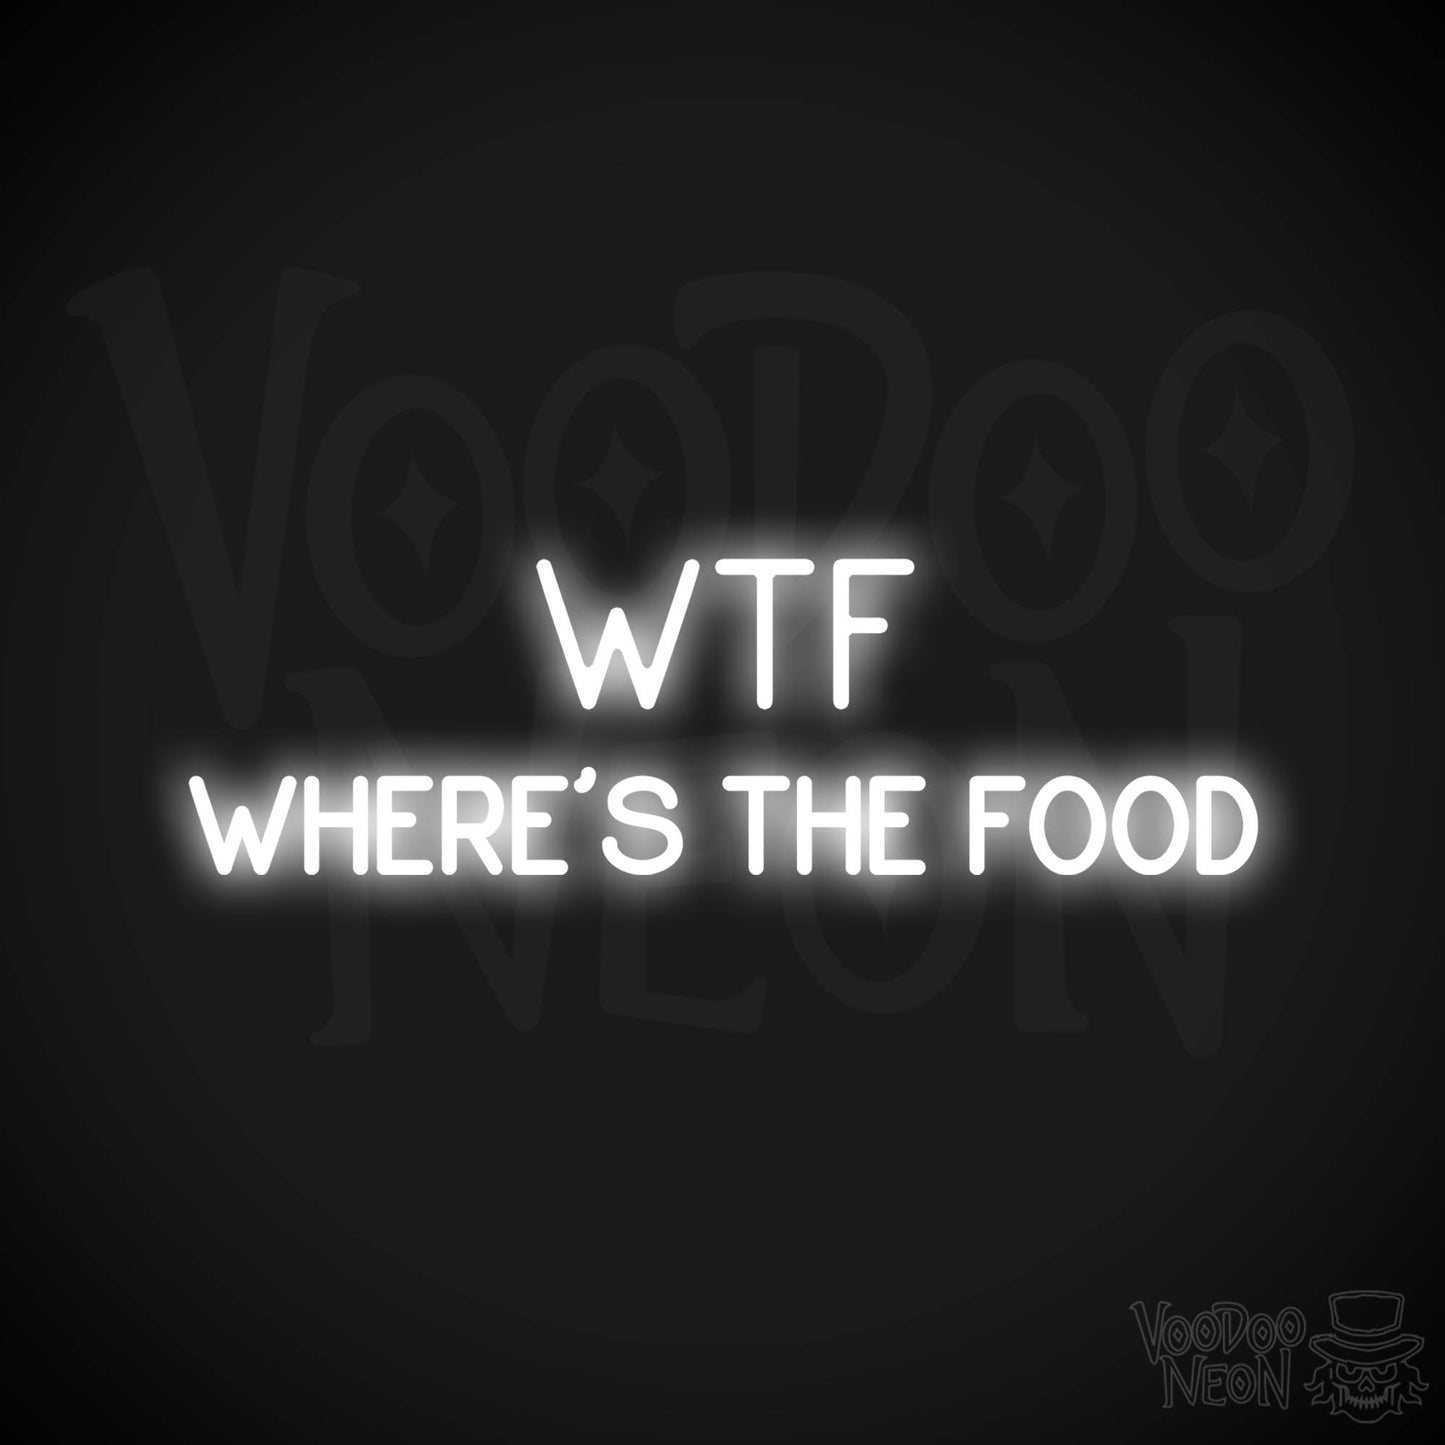 Wtf (Wheres The Food) LED Neon - White